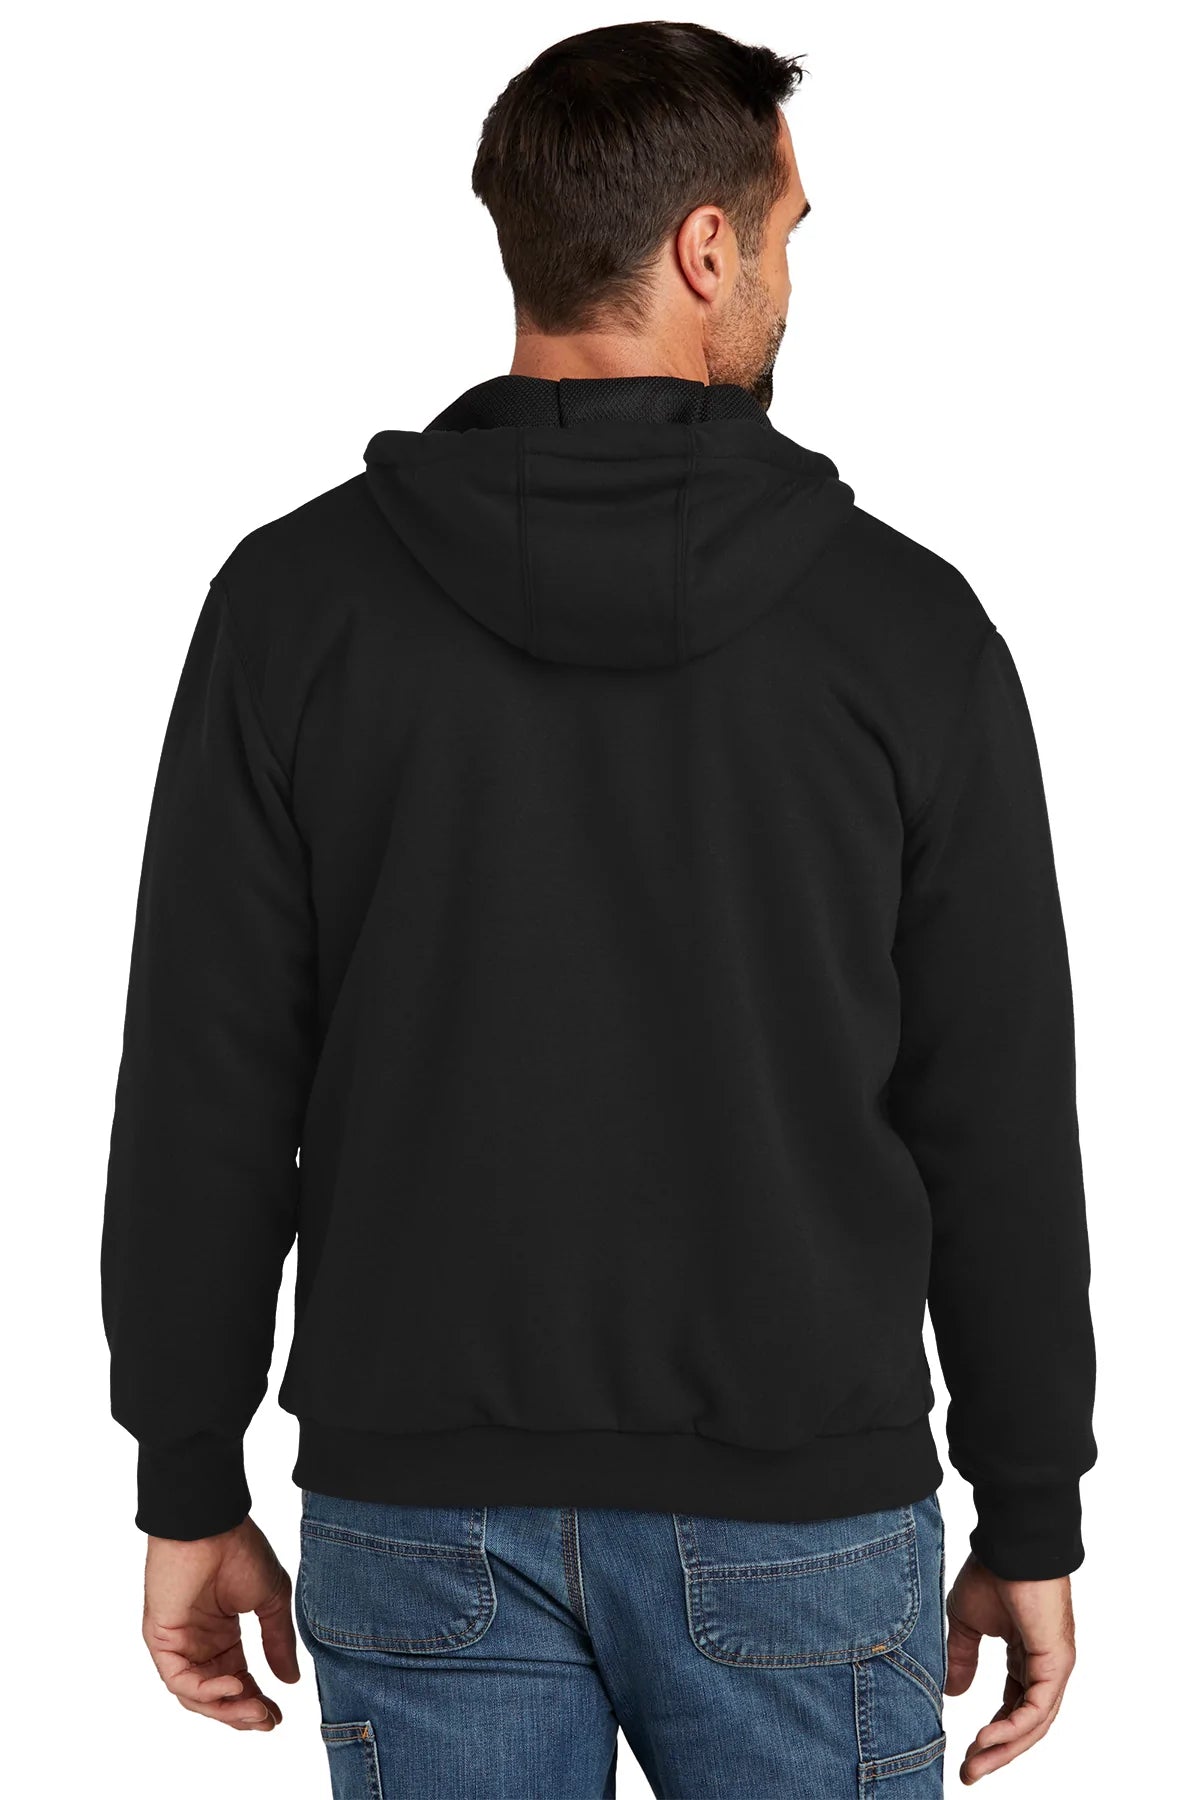 Carhartt Thermal-Lined Full-Zip SweatShirt, Black